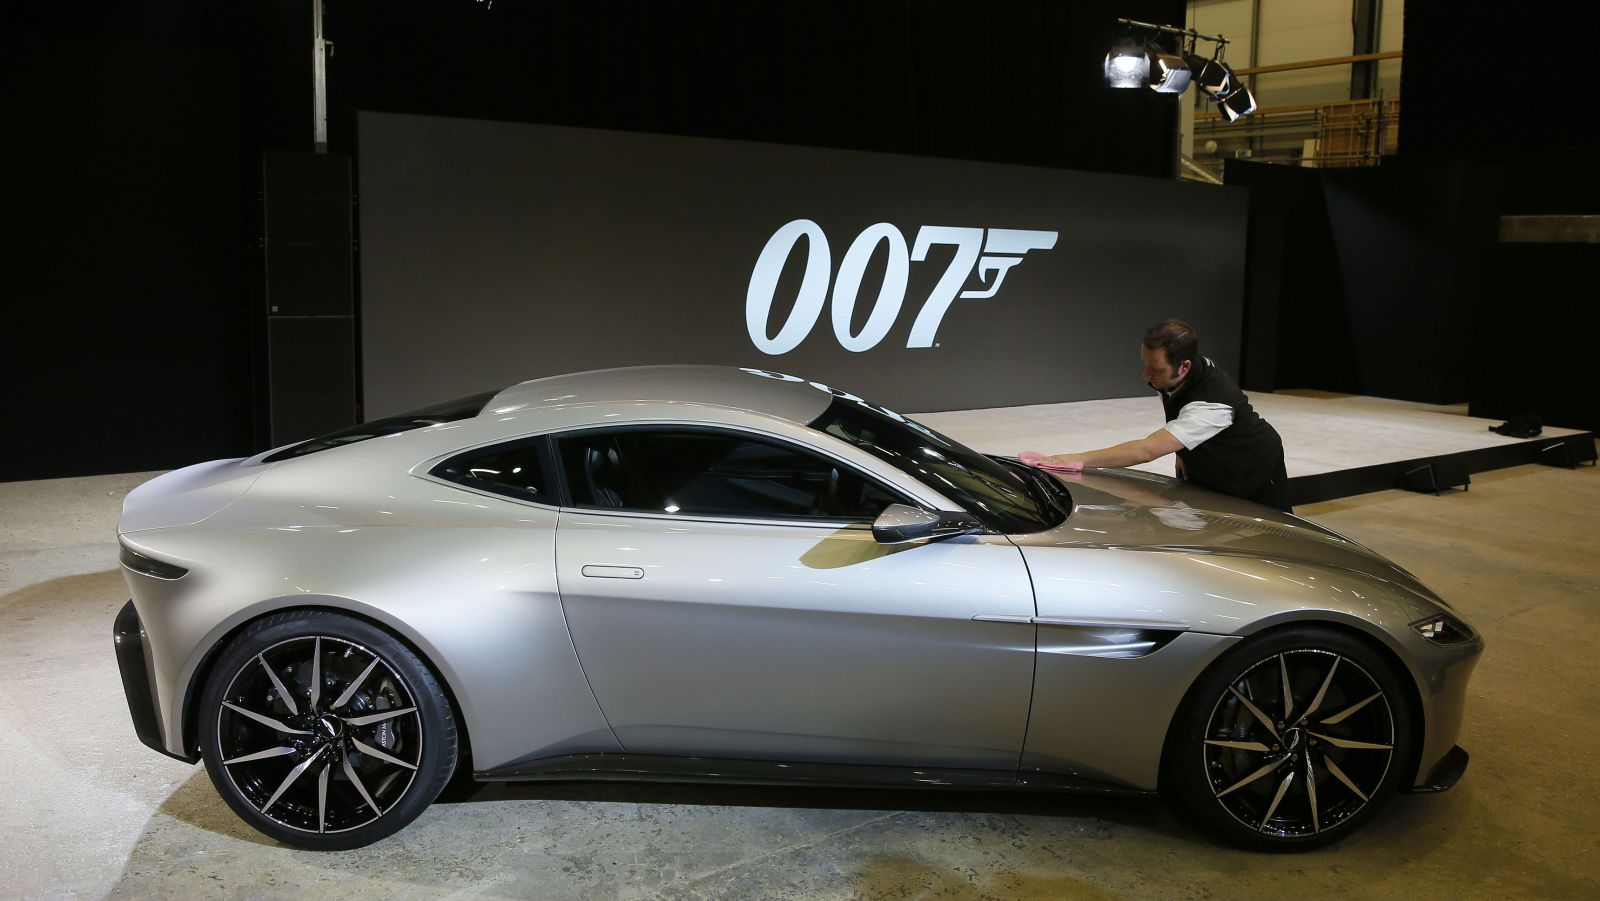 The New James Bond Film Spectre Aston Martin Db10 Quartz